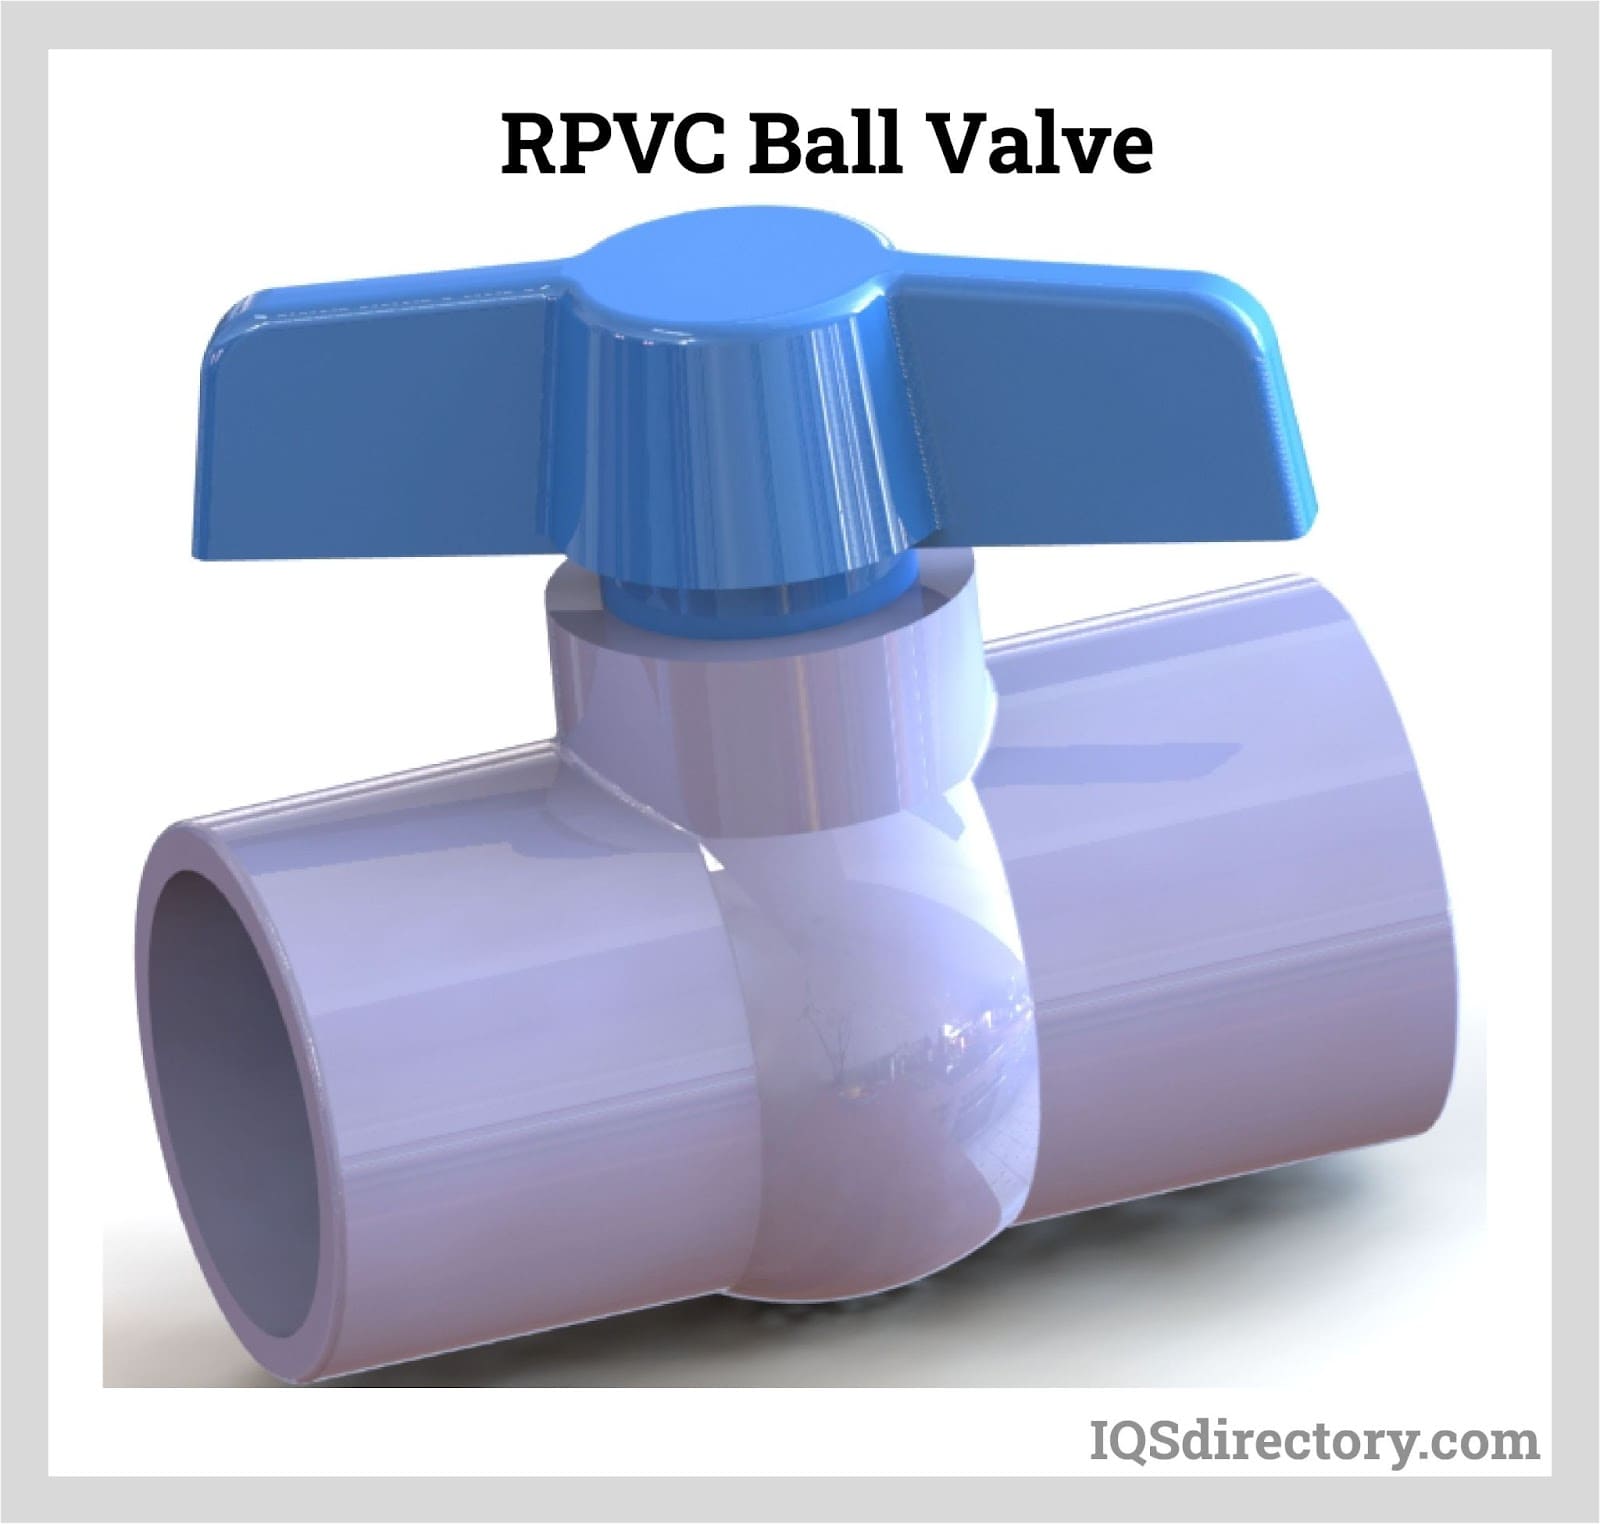 RPVC Ball Valve